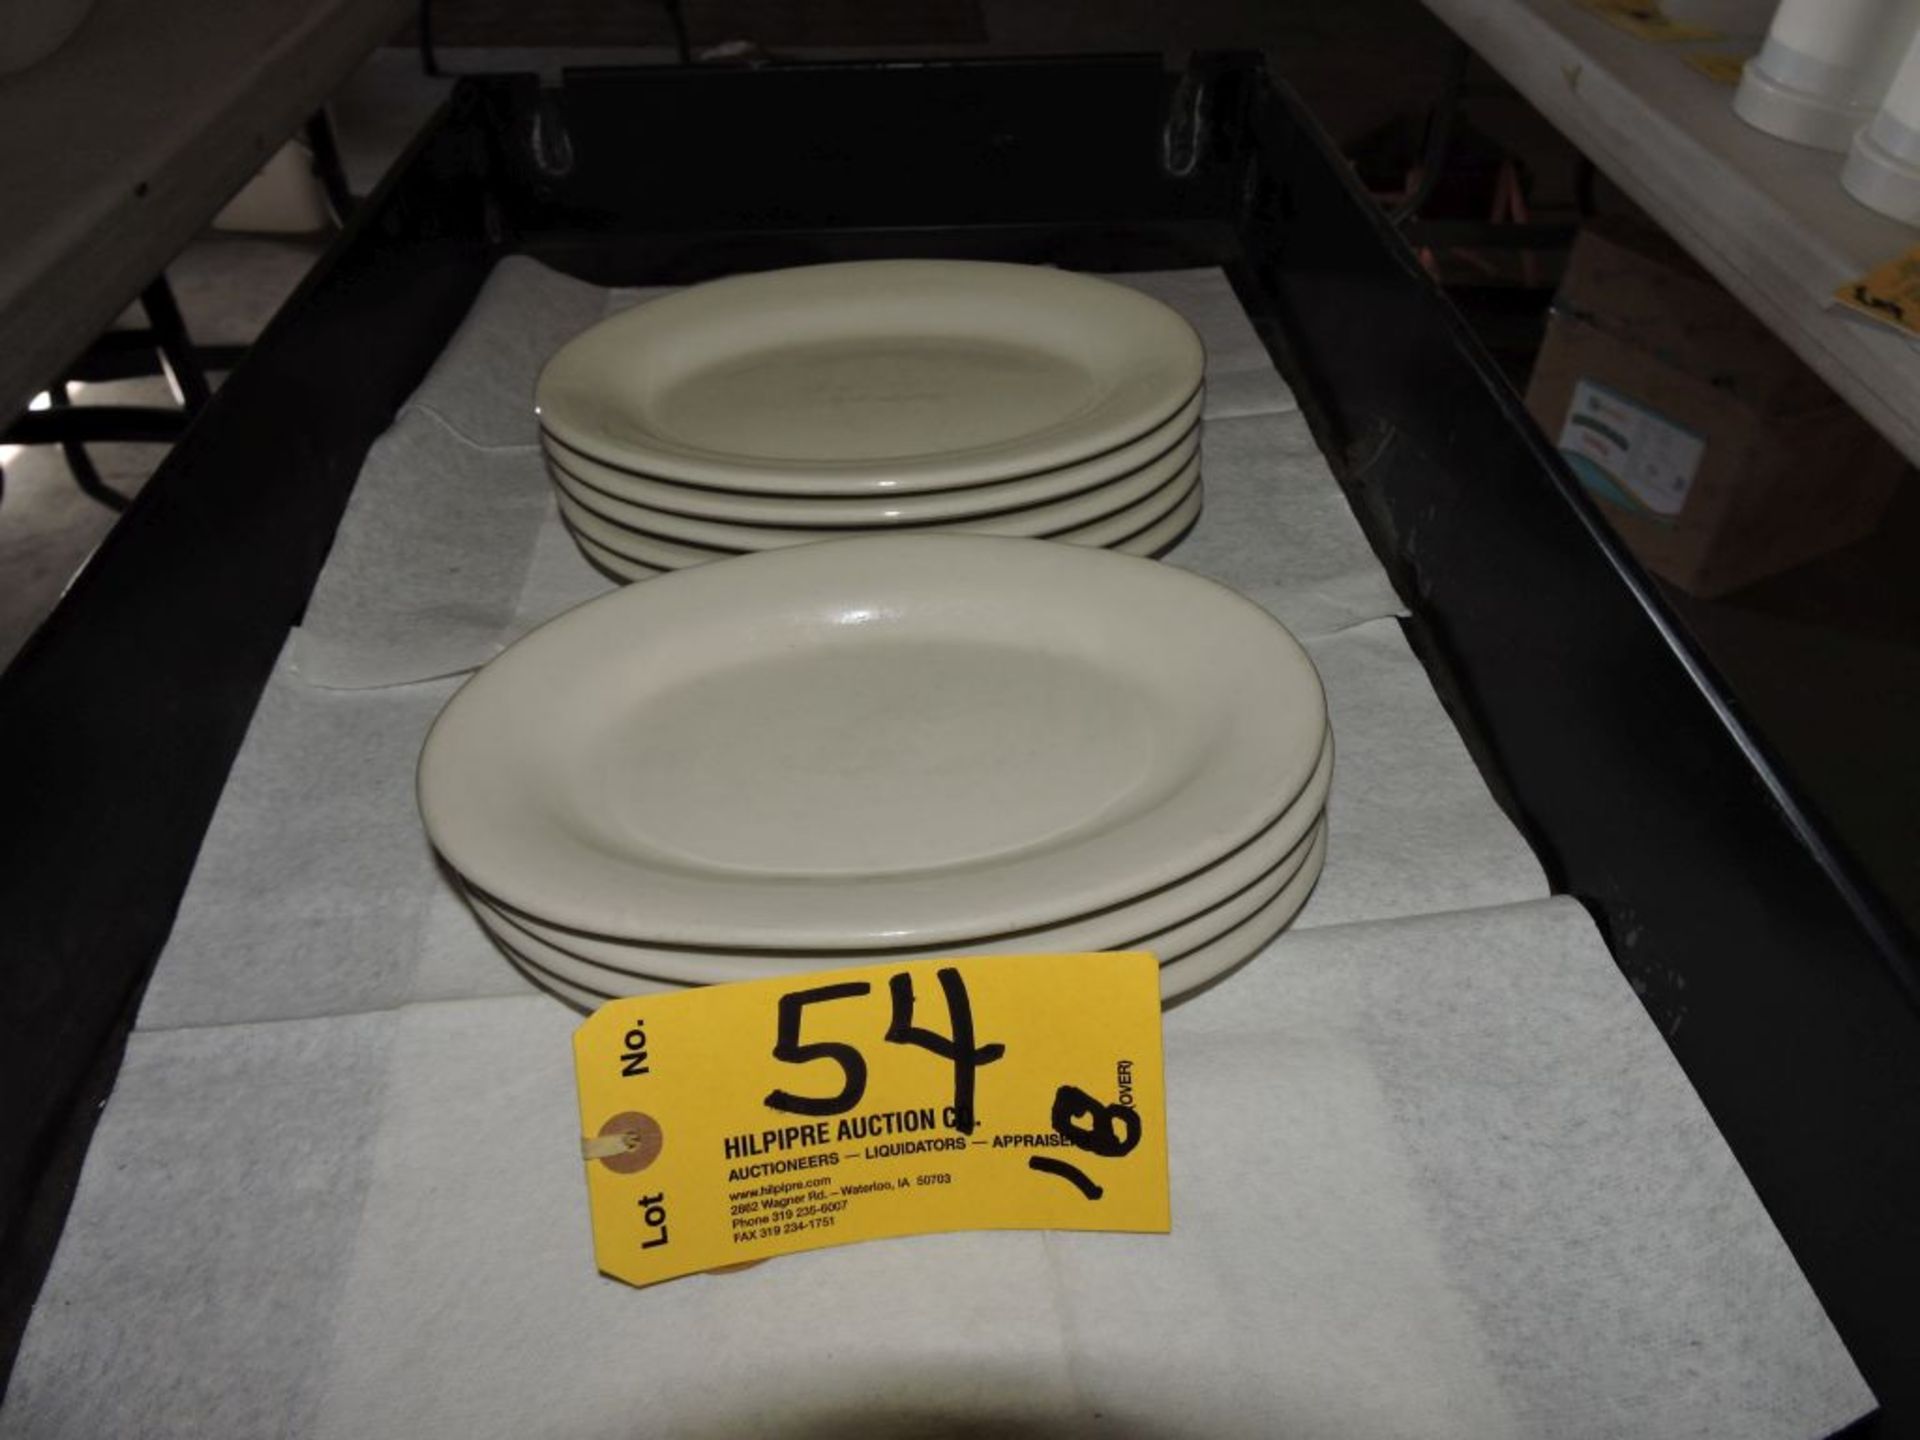 China steak plates, 9" x 6".